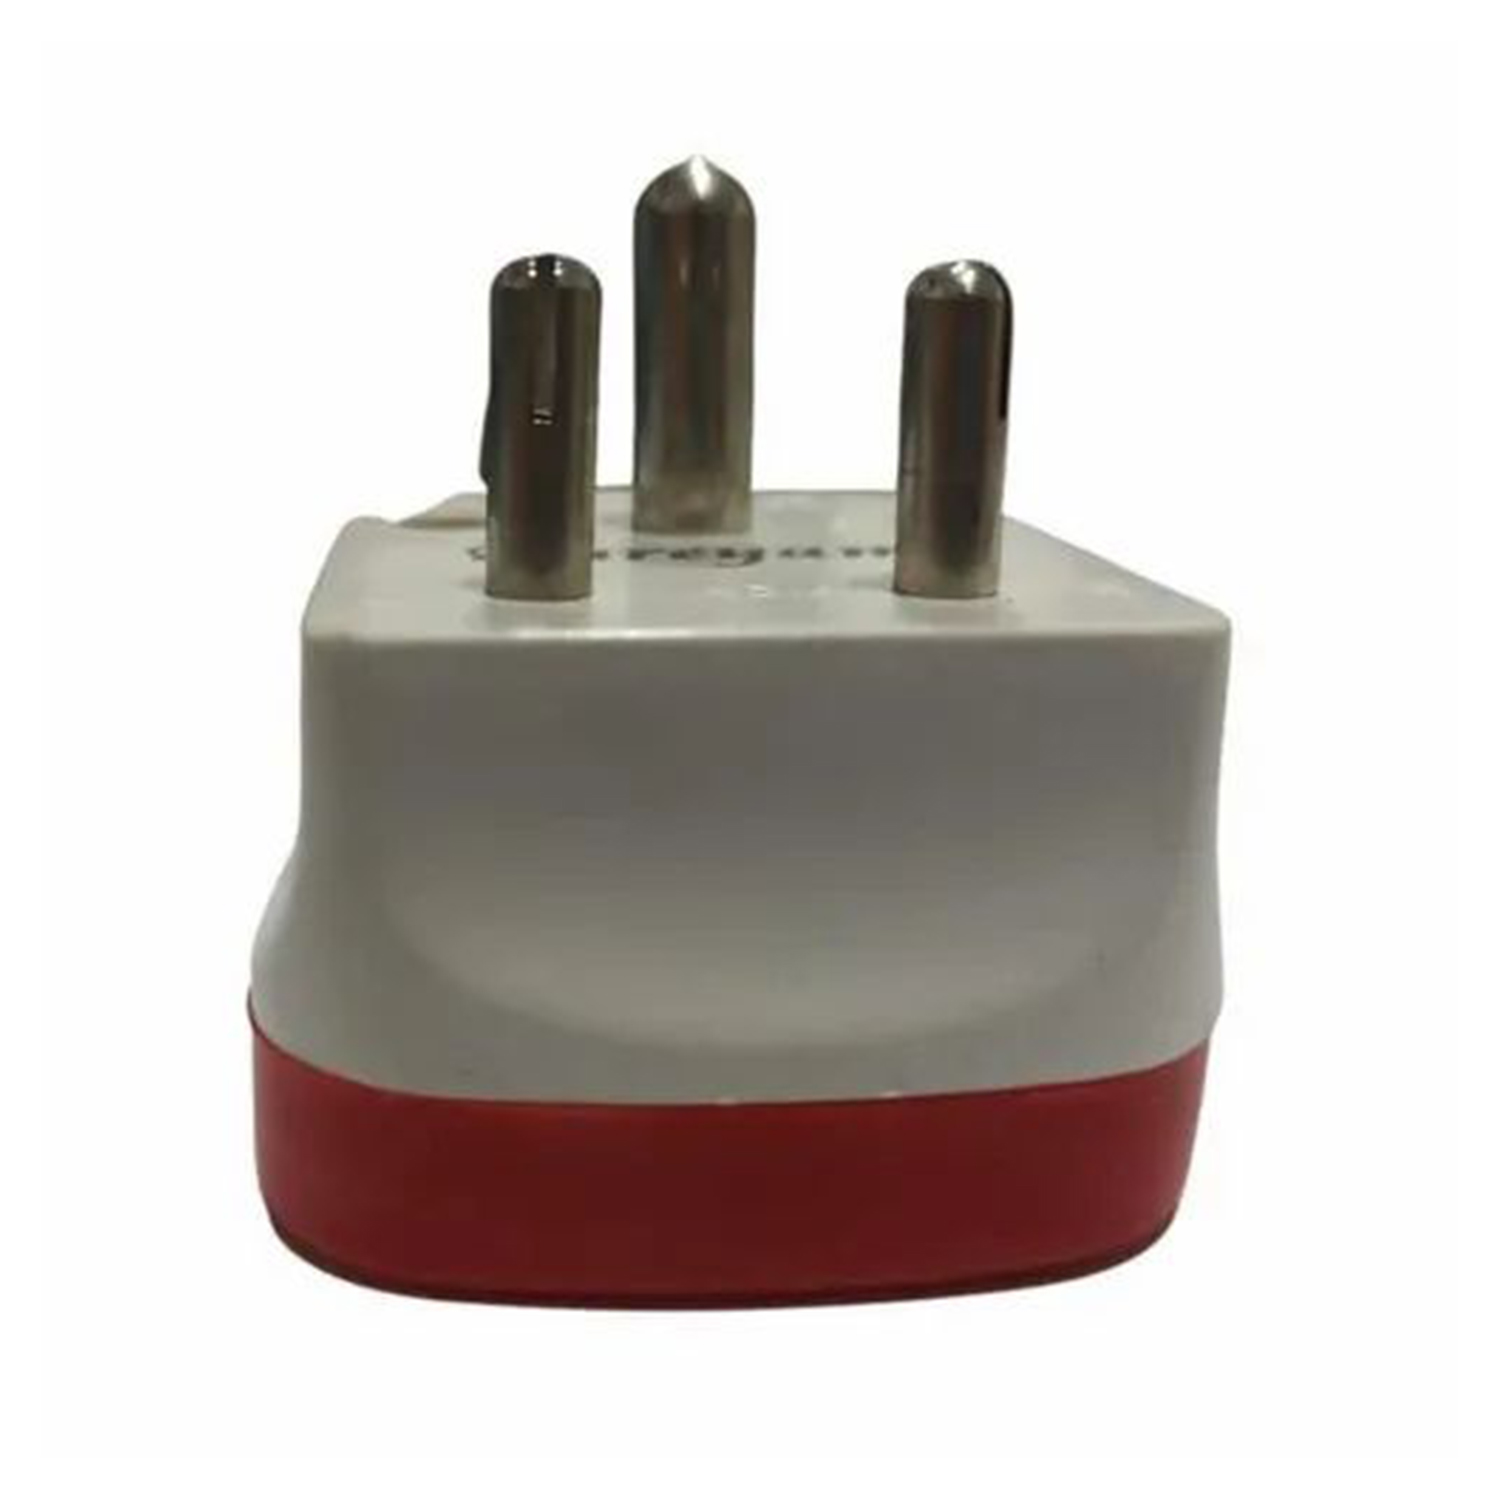 Shreyam SE 164 Universal Conversion Plug 3 PIN| 5-15 Amp Converter | 1 PC (White & Red)